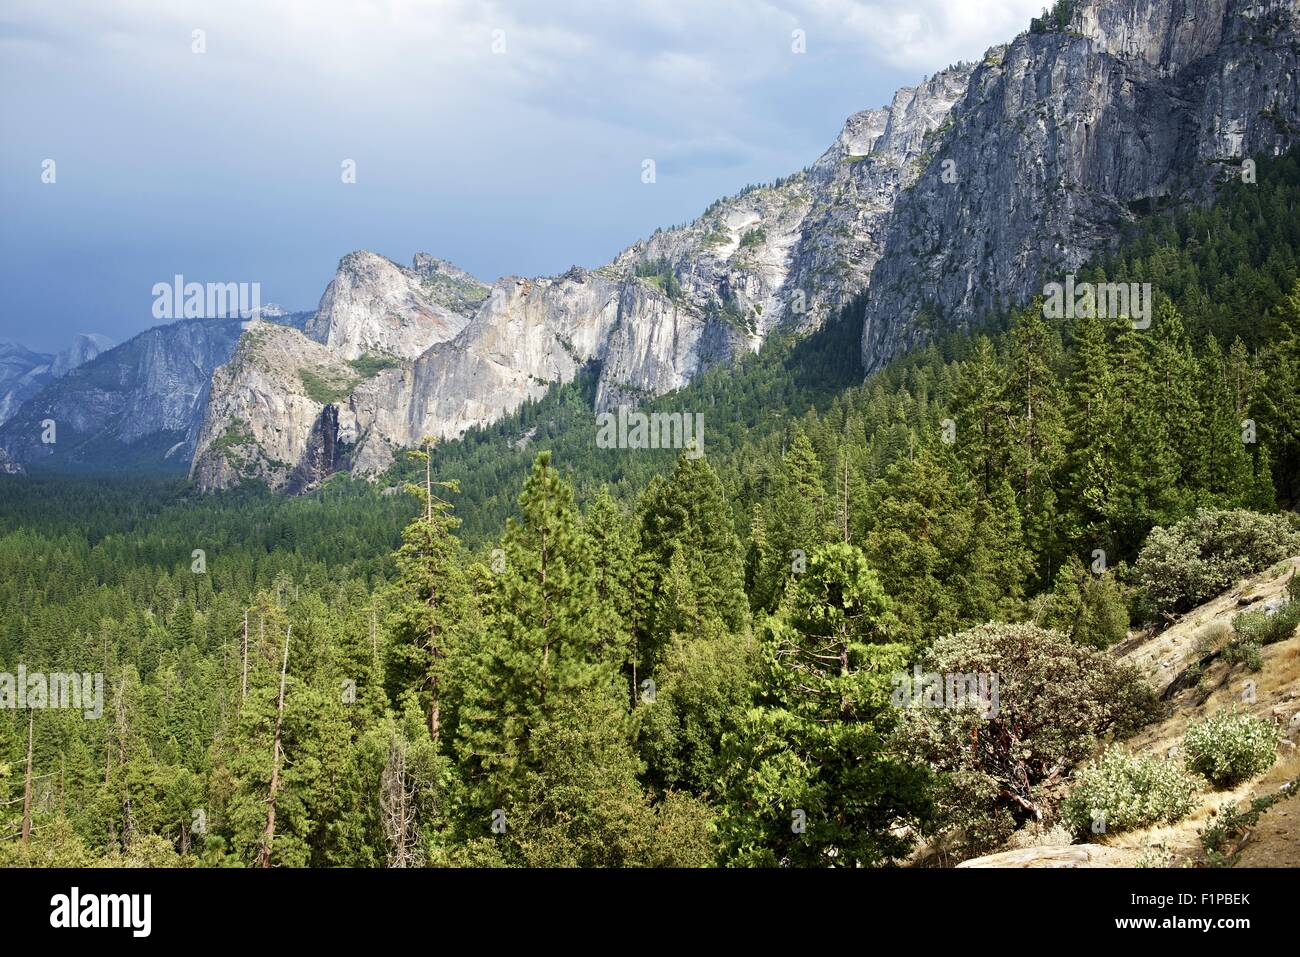 Yosemite National Park. Yosemite Valley in Summer. Nature Photo Collection. California, USA. Stock Photo